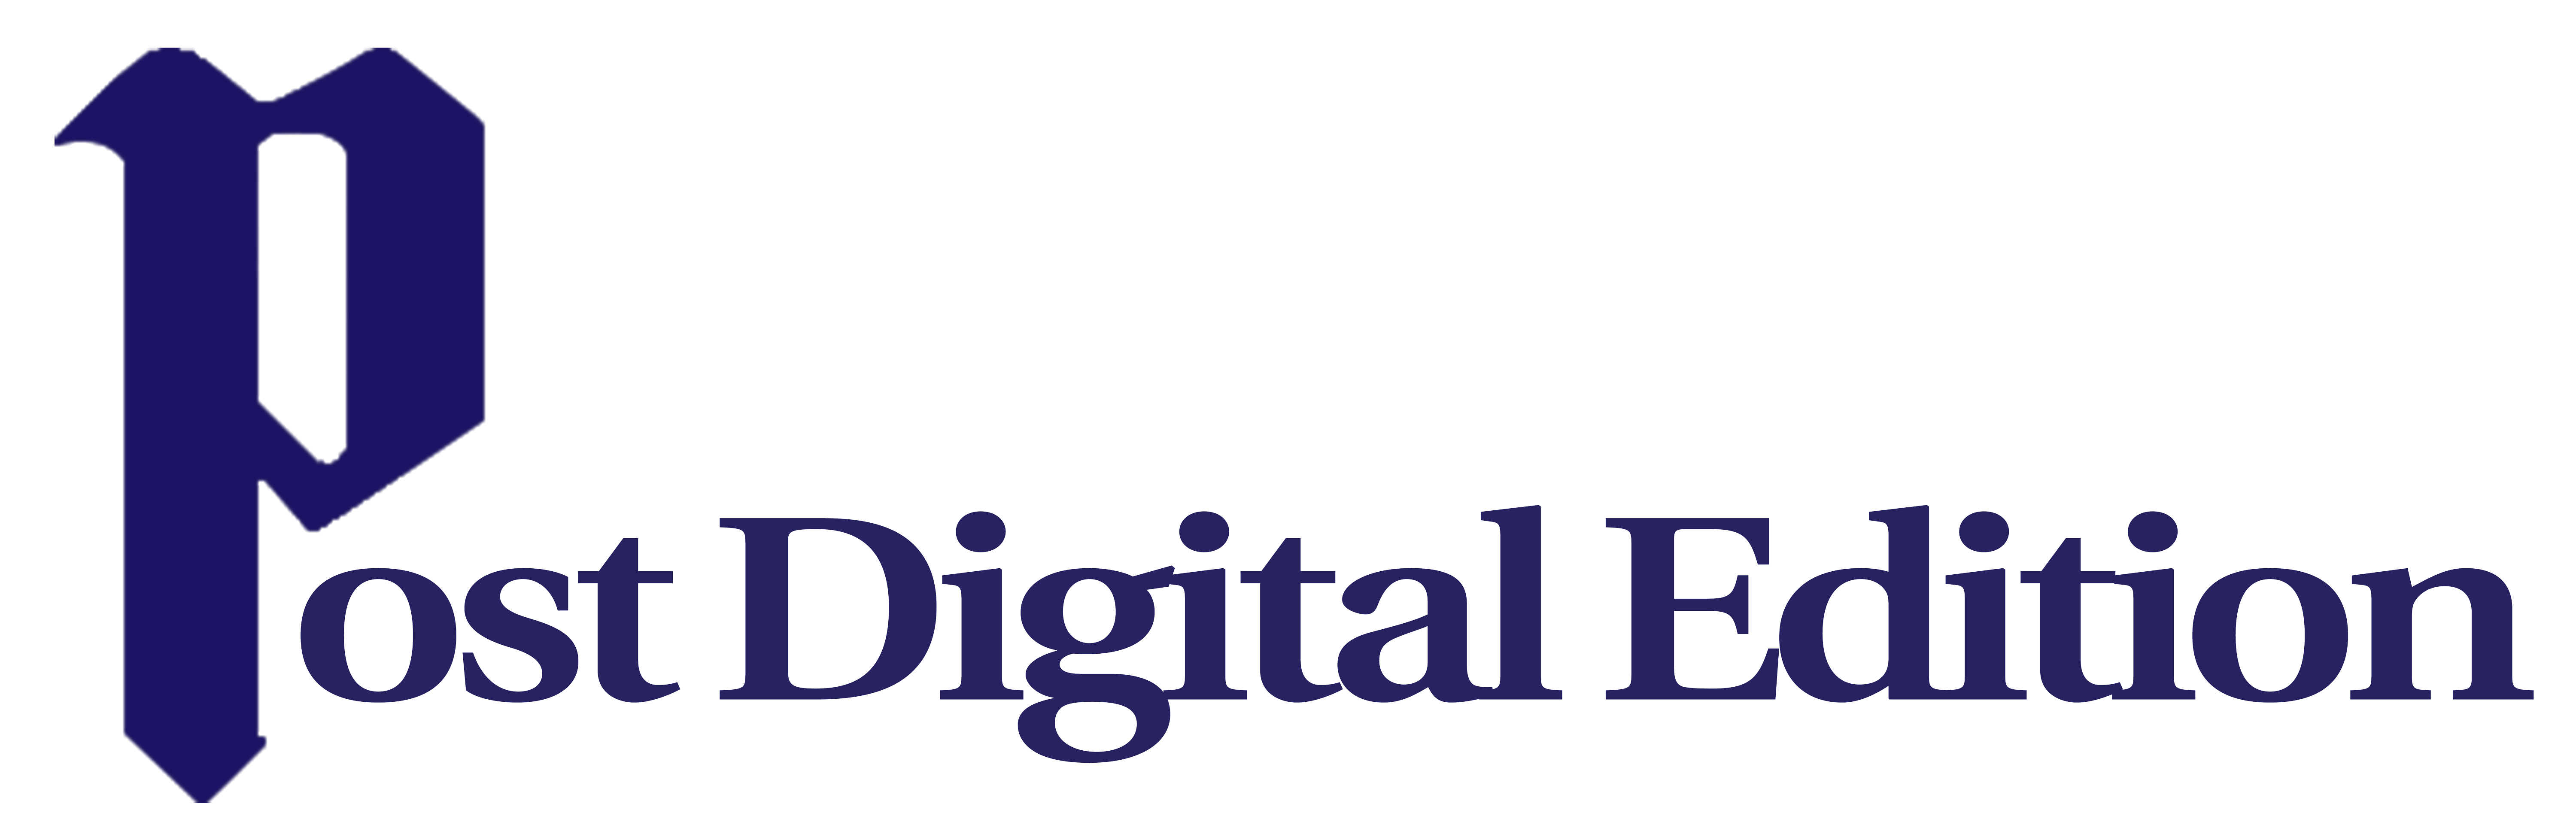 Brand logo post digital